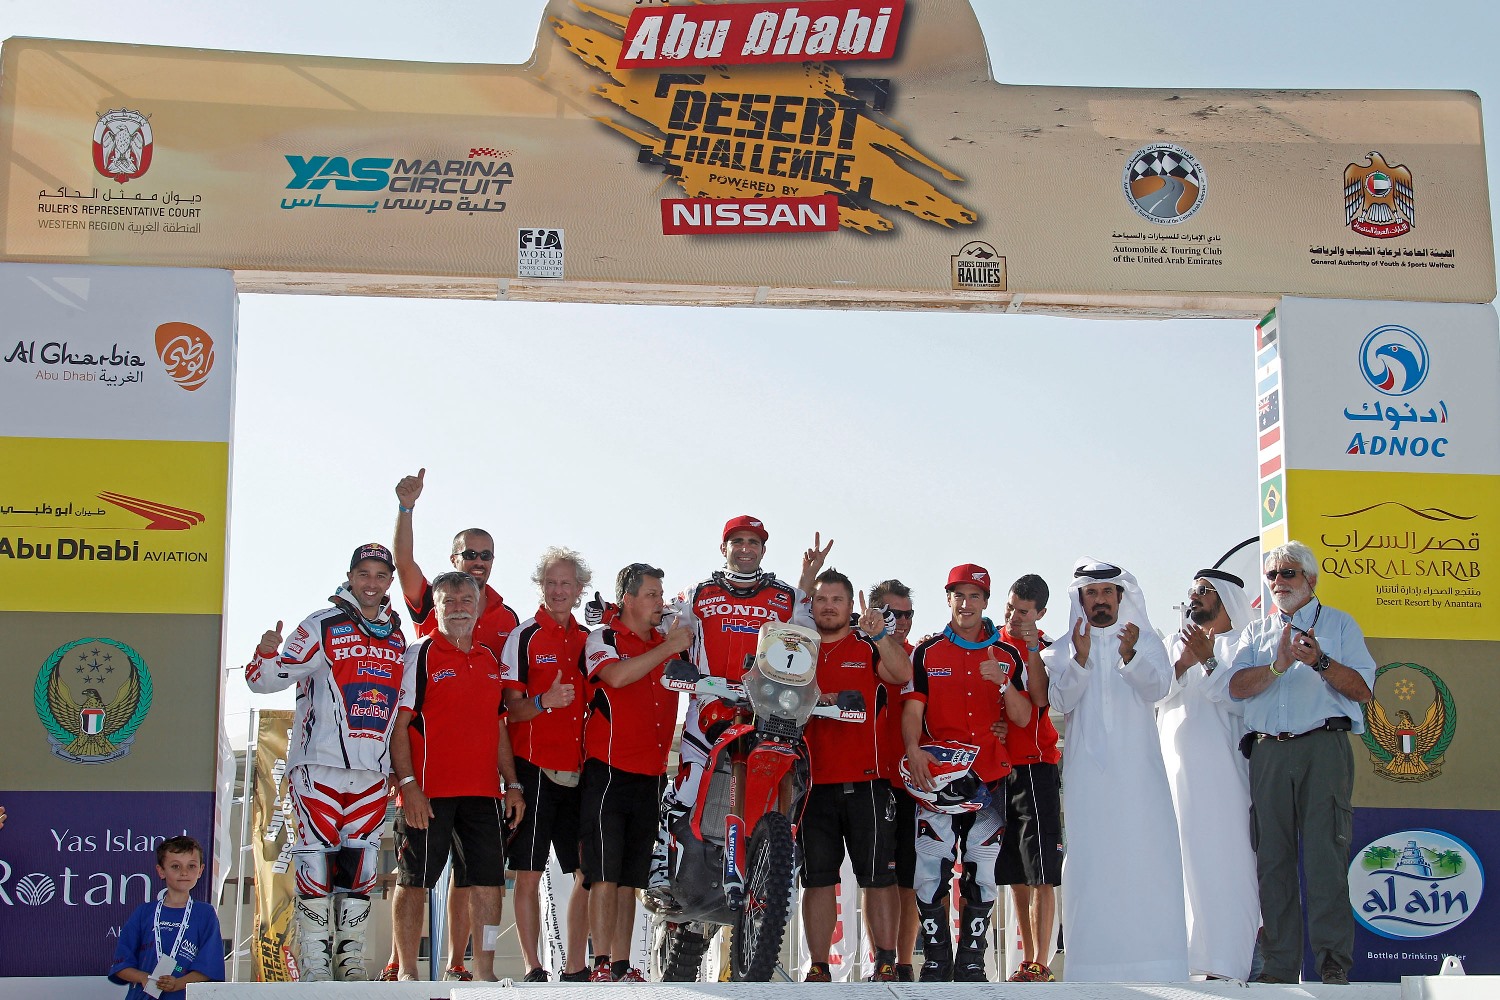 Abu Dhabi Desert Challenge 2014 